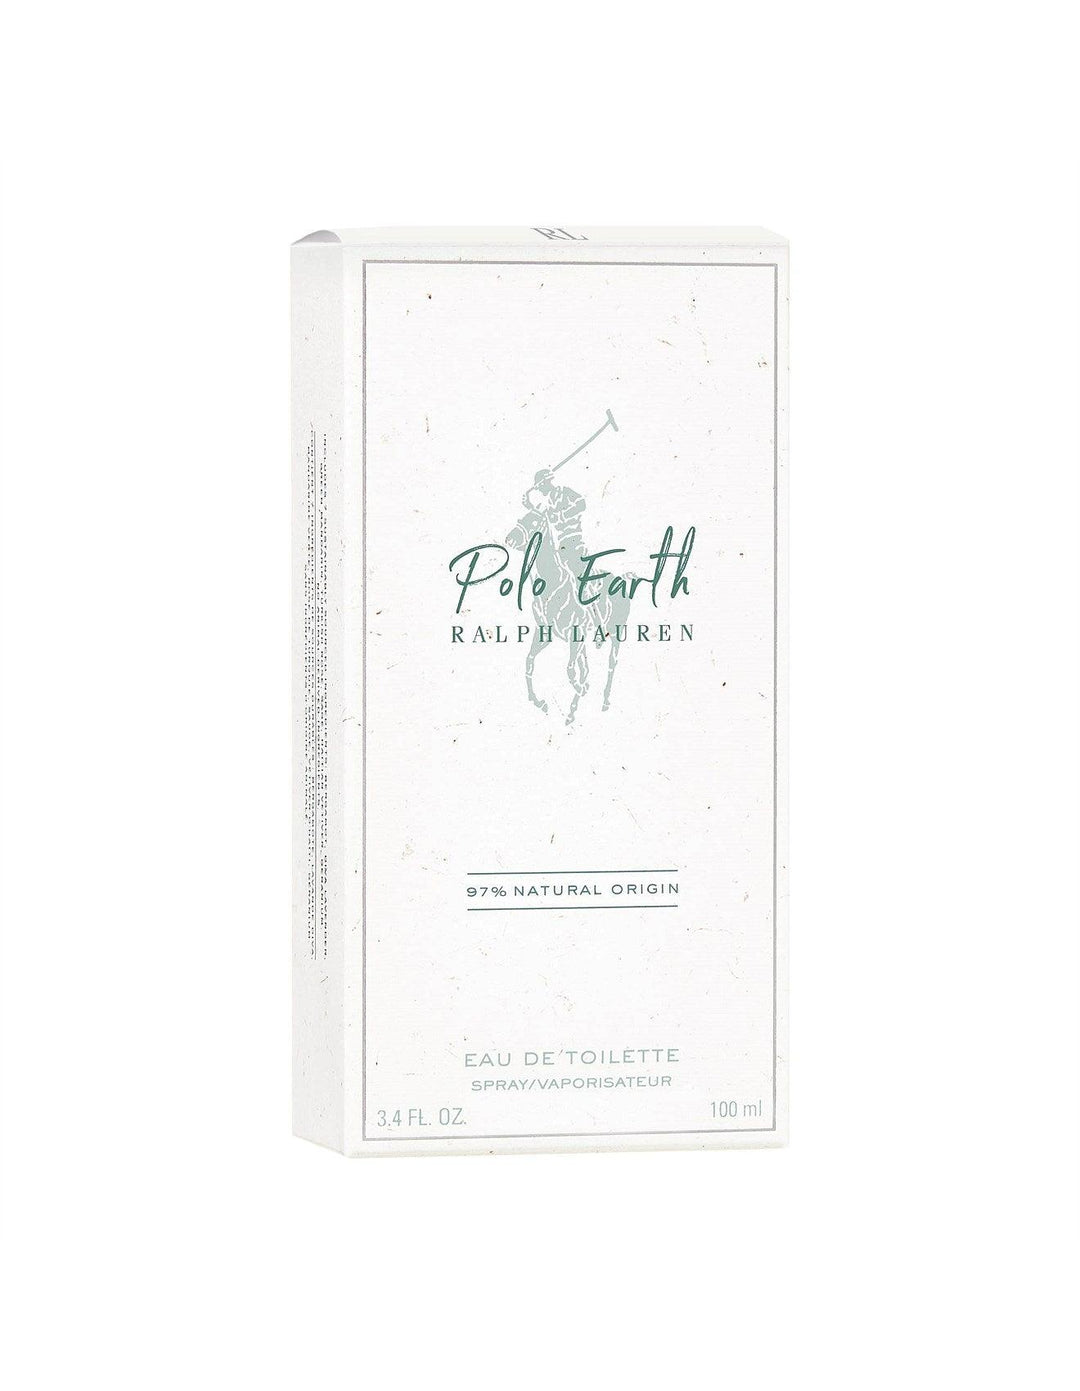 Ralph Lauren - Polo Earth EDT - Ascent Luxury Cosmetics